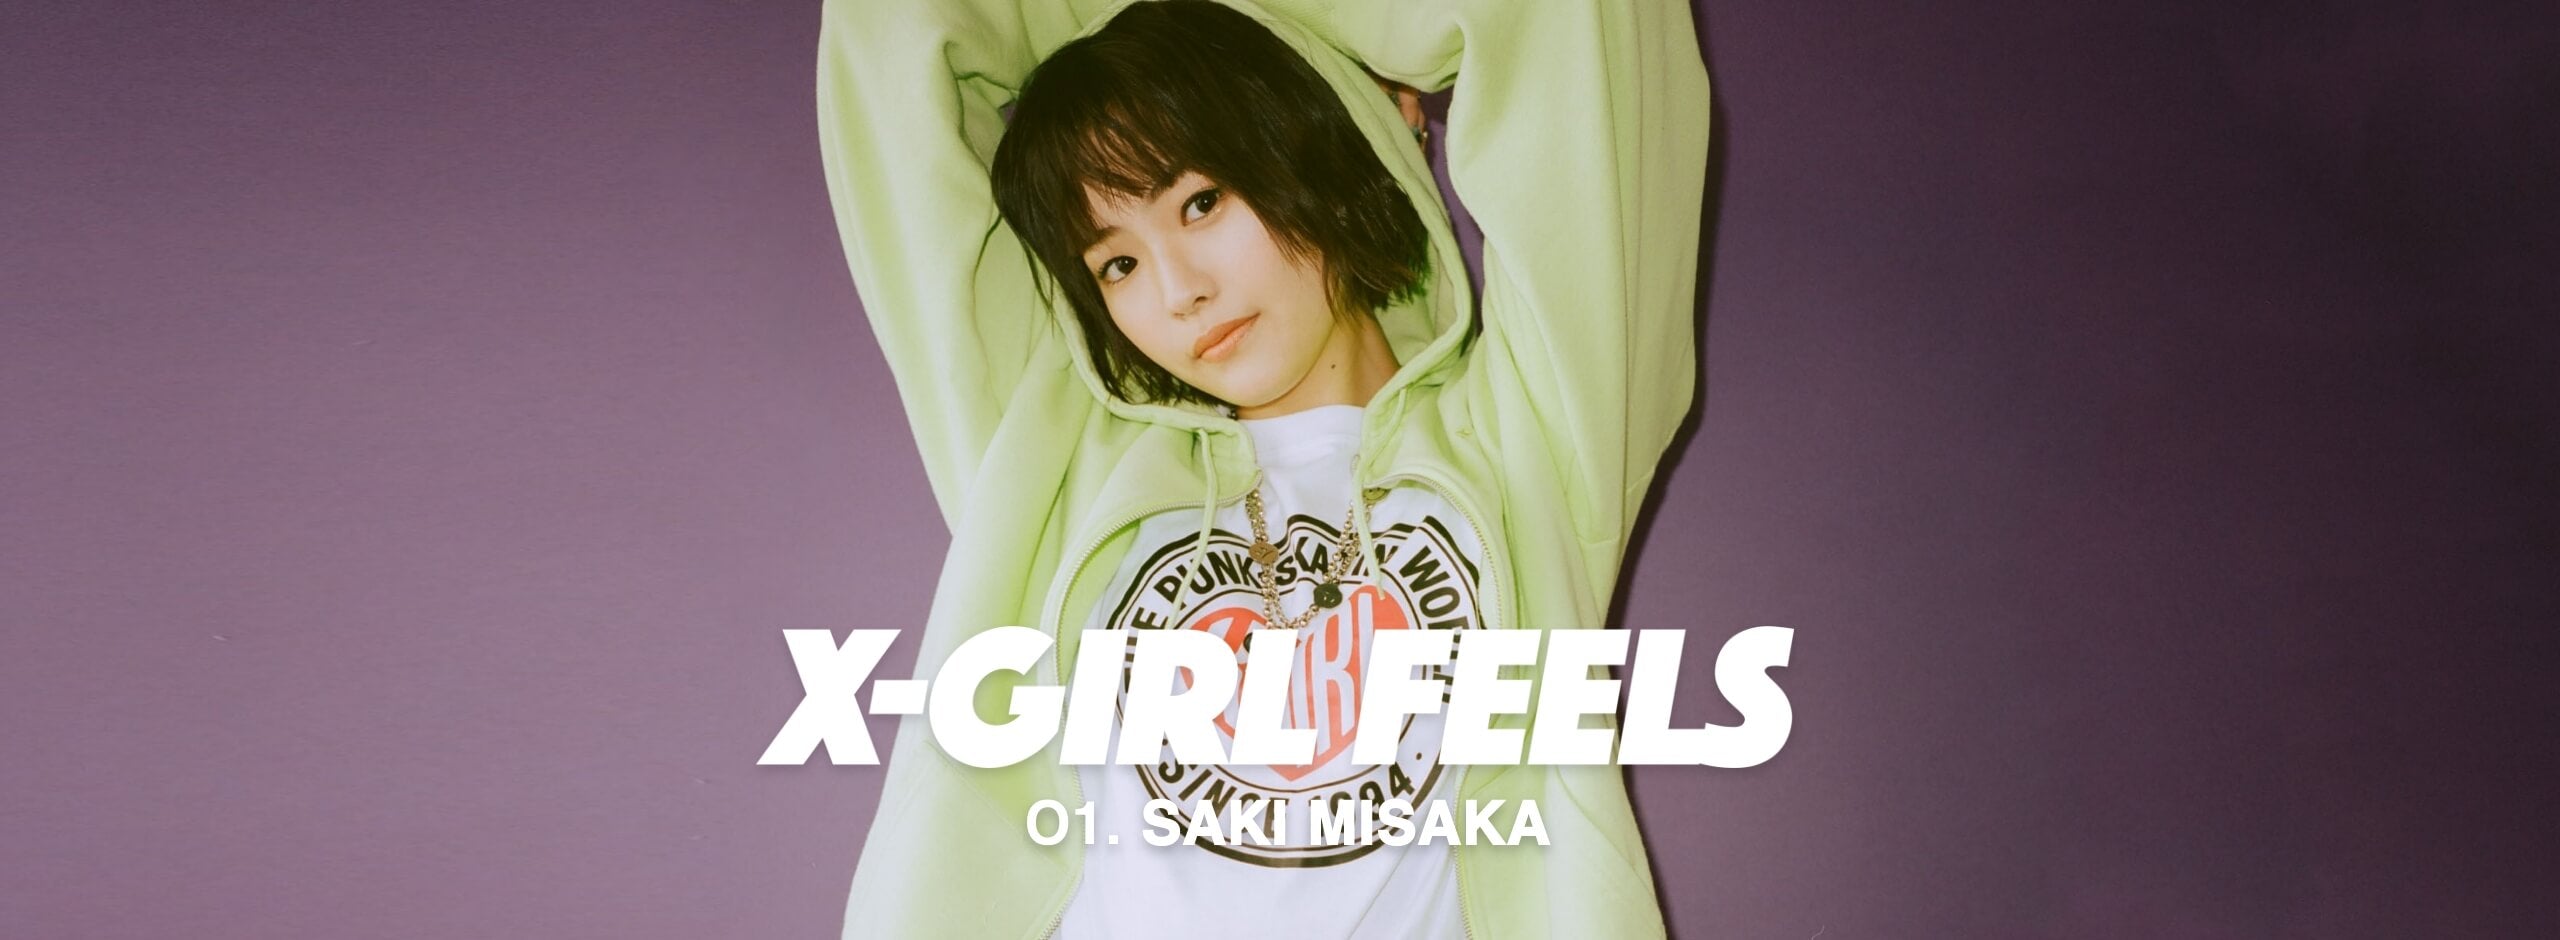 X-GIRL FEELS 01 SAKI MISAKA